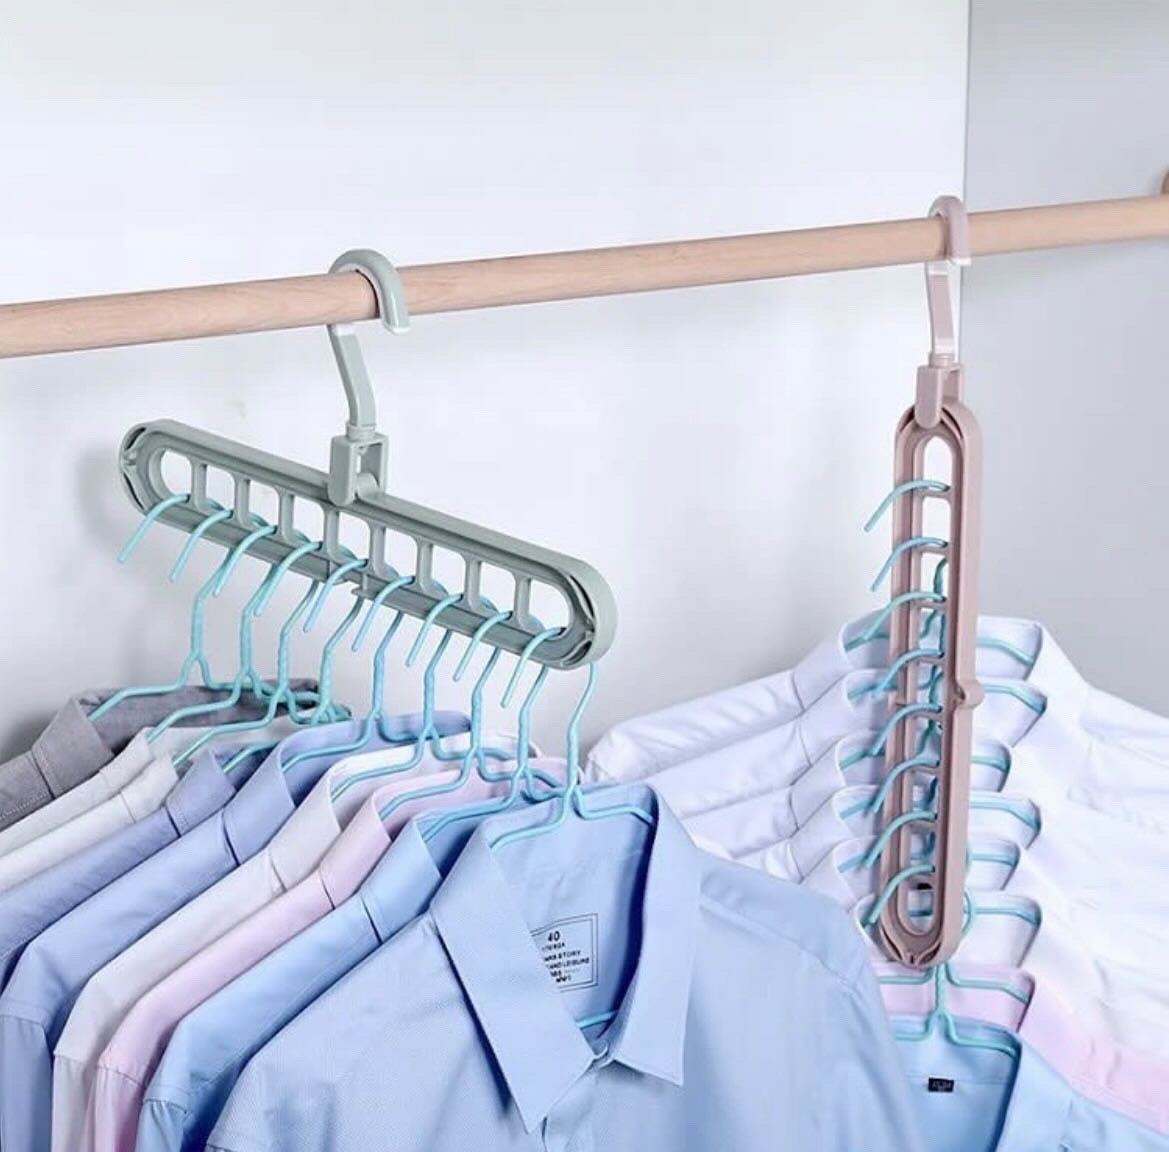 Multi clothes hanger